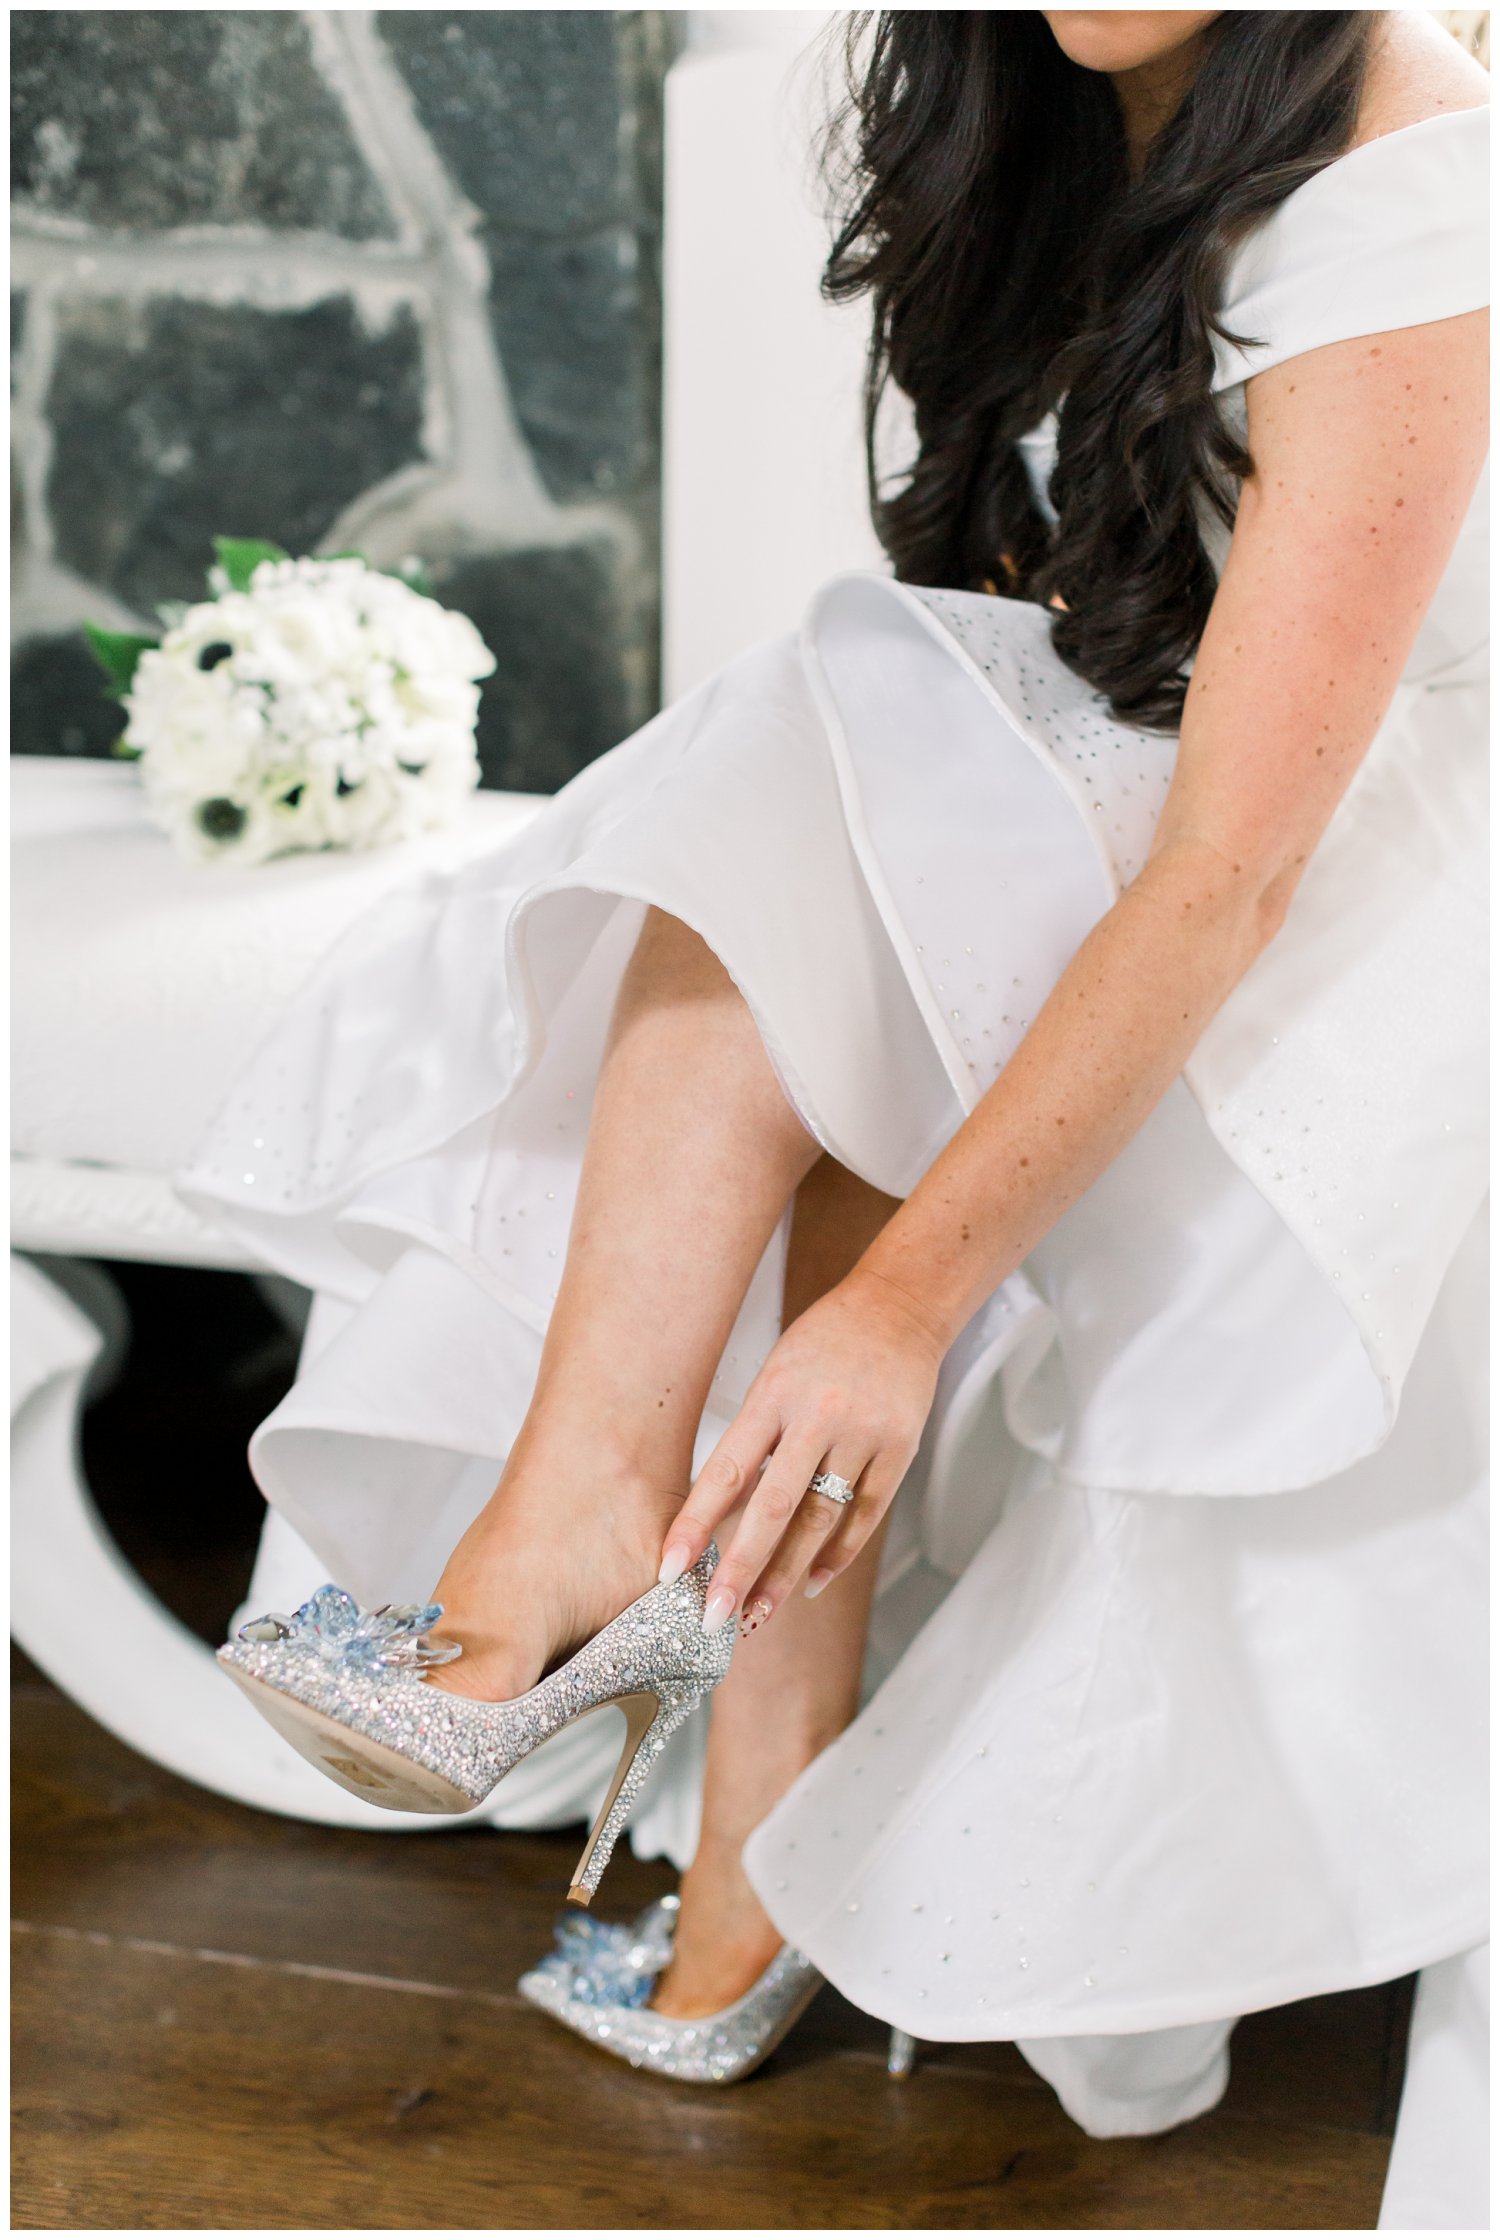 Jimmy Choo Cinderella Swarovski crystal slipper heels wedding day shoes at Smithmore Castle